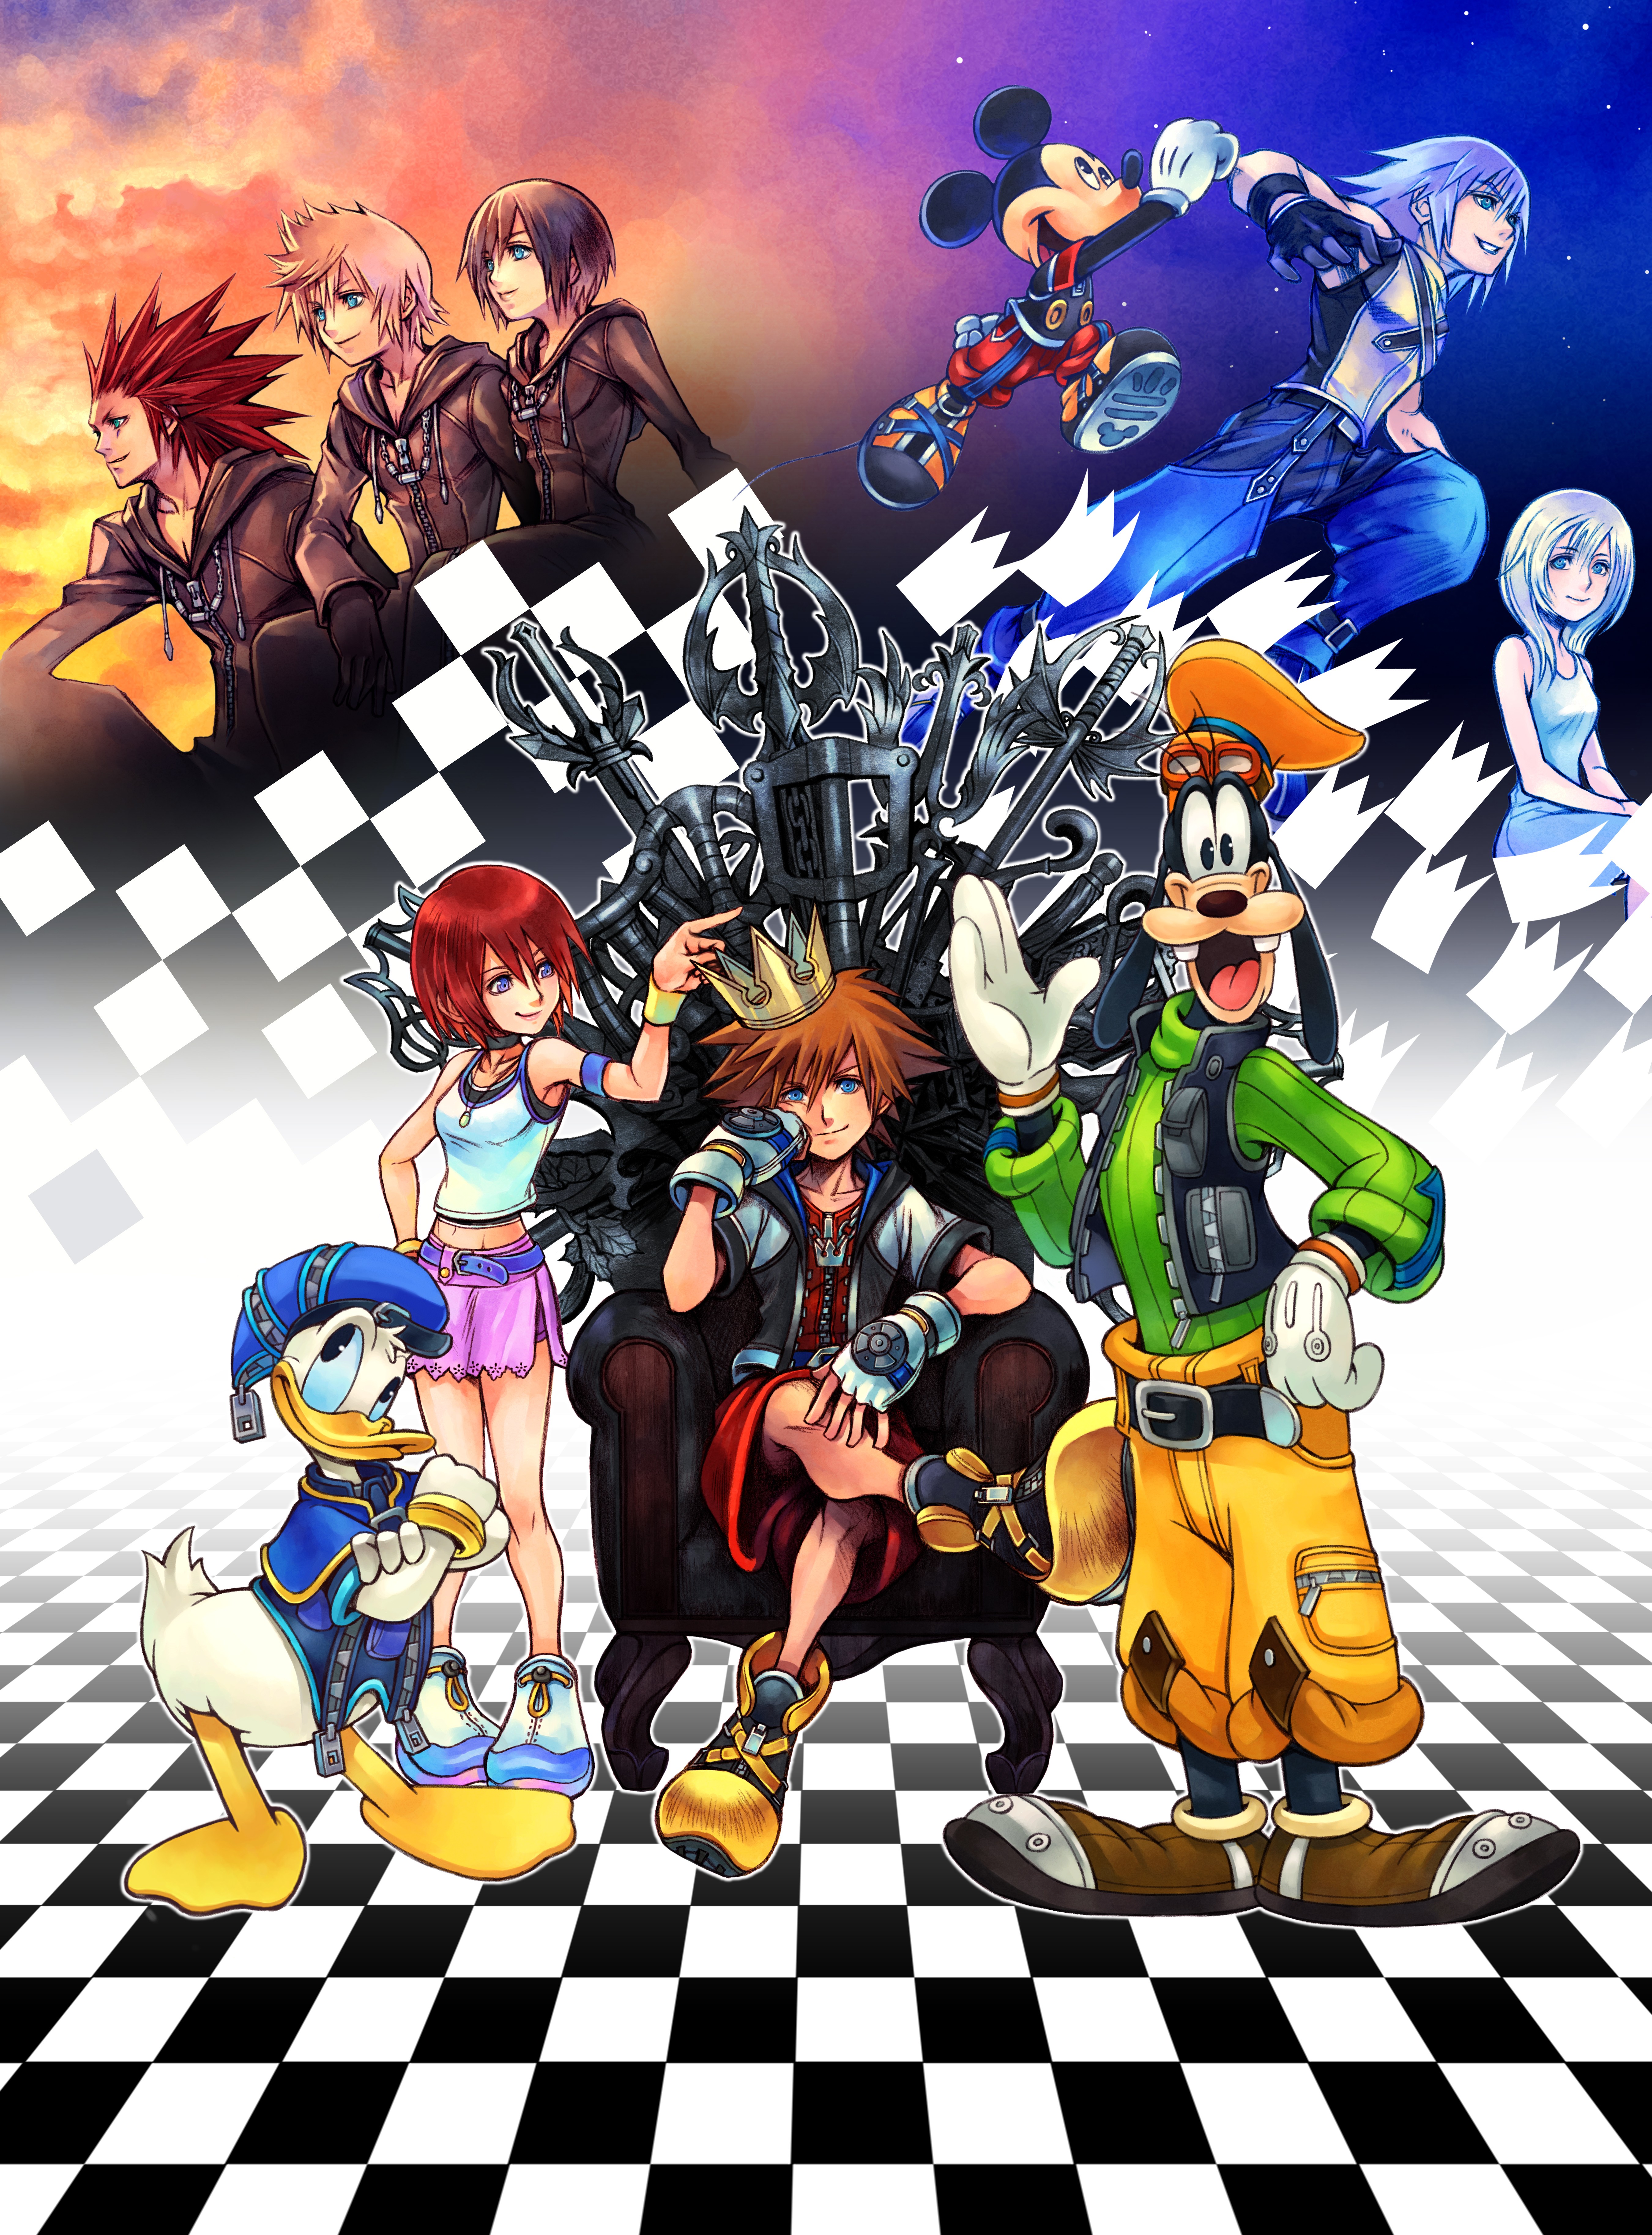 Kingdom Hearts Ps3 Theme Sound